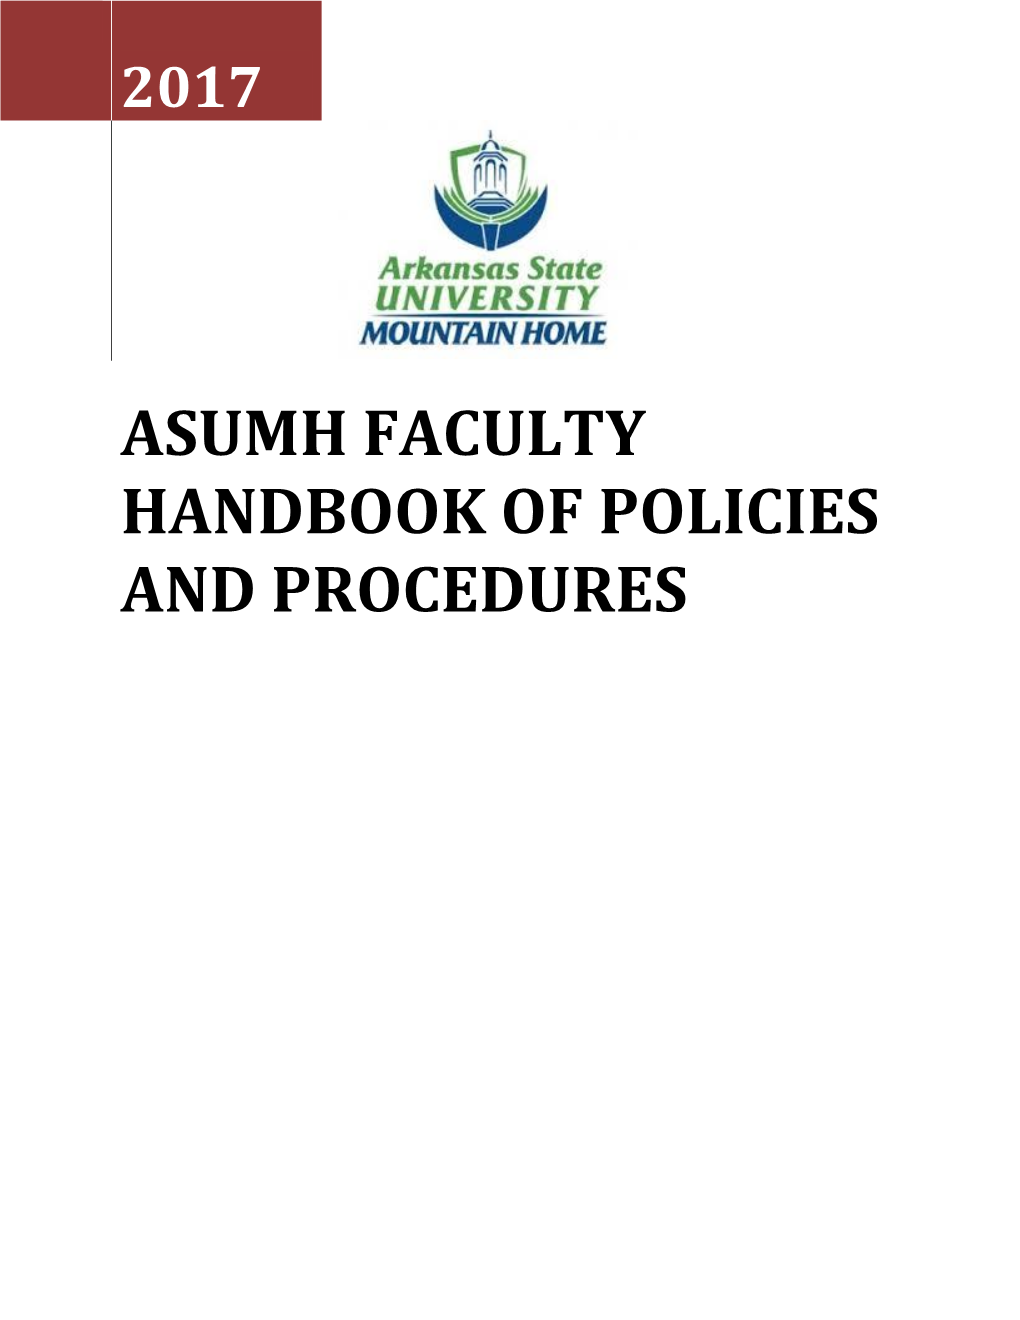 Asumh Faculty Handbook of Policies and Procedures